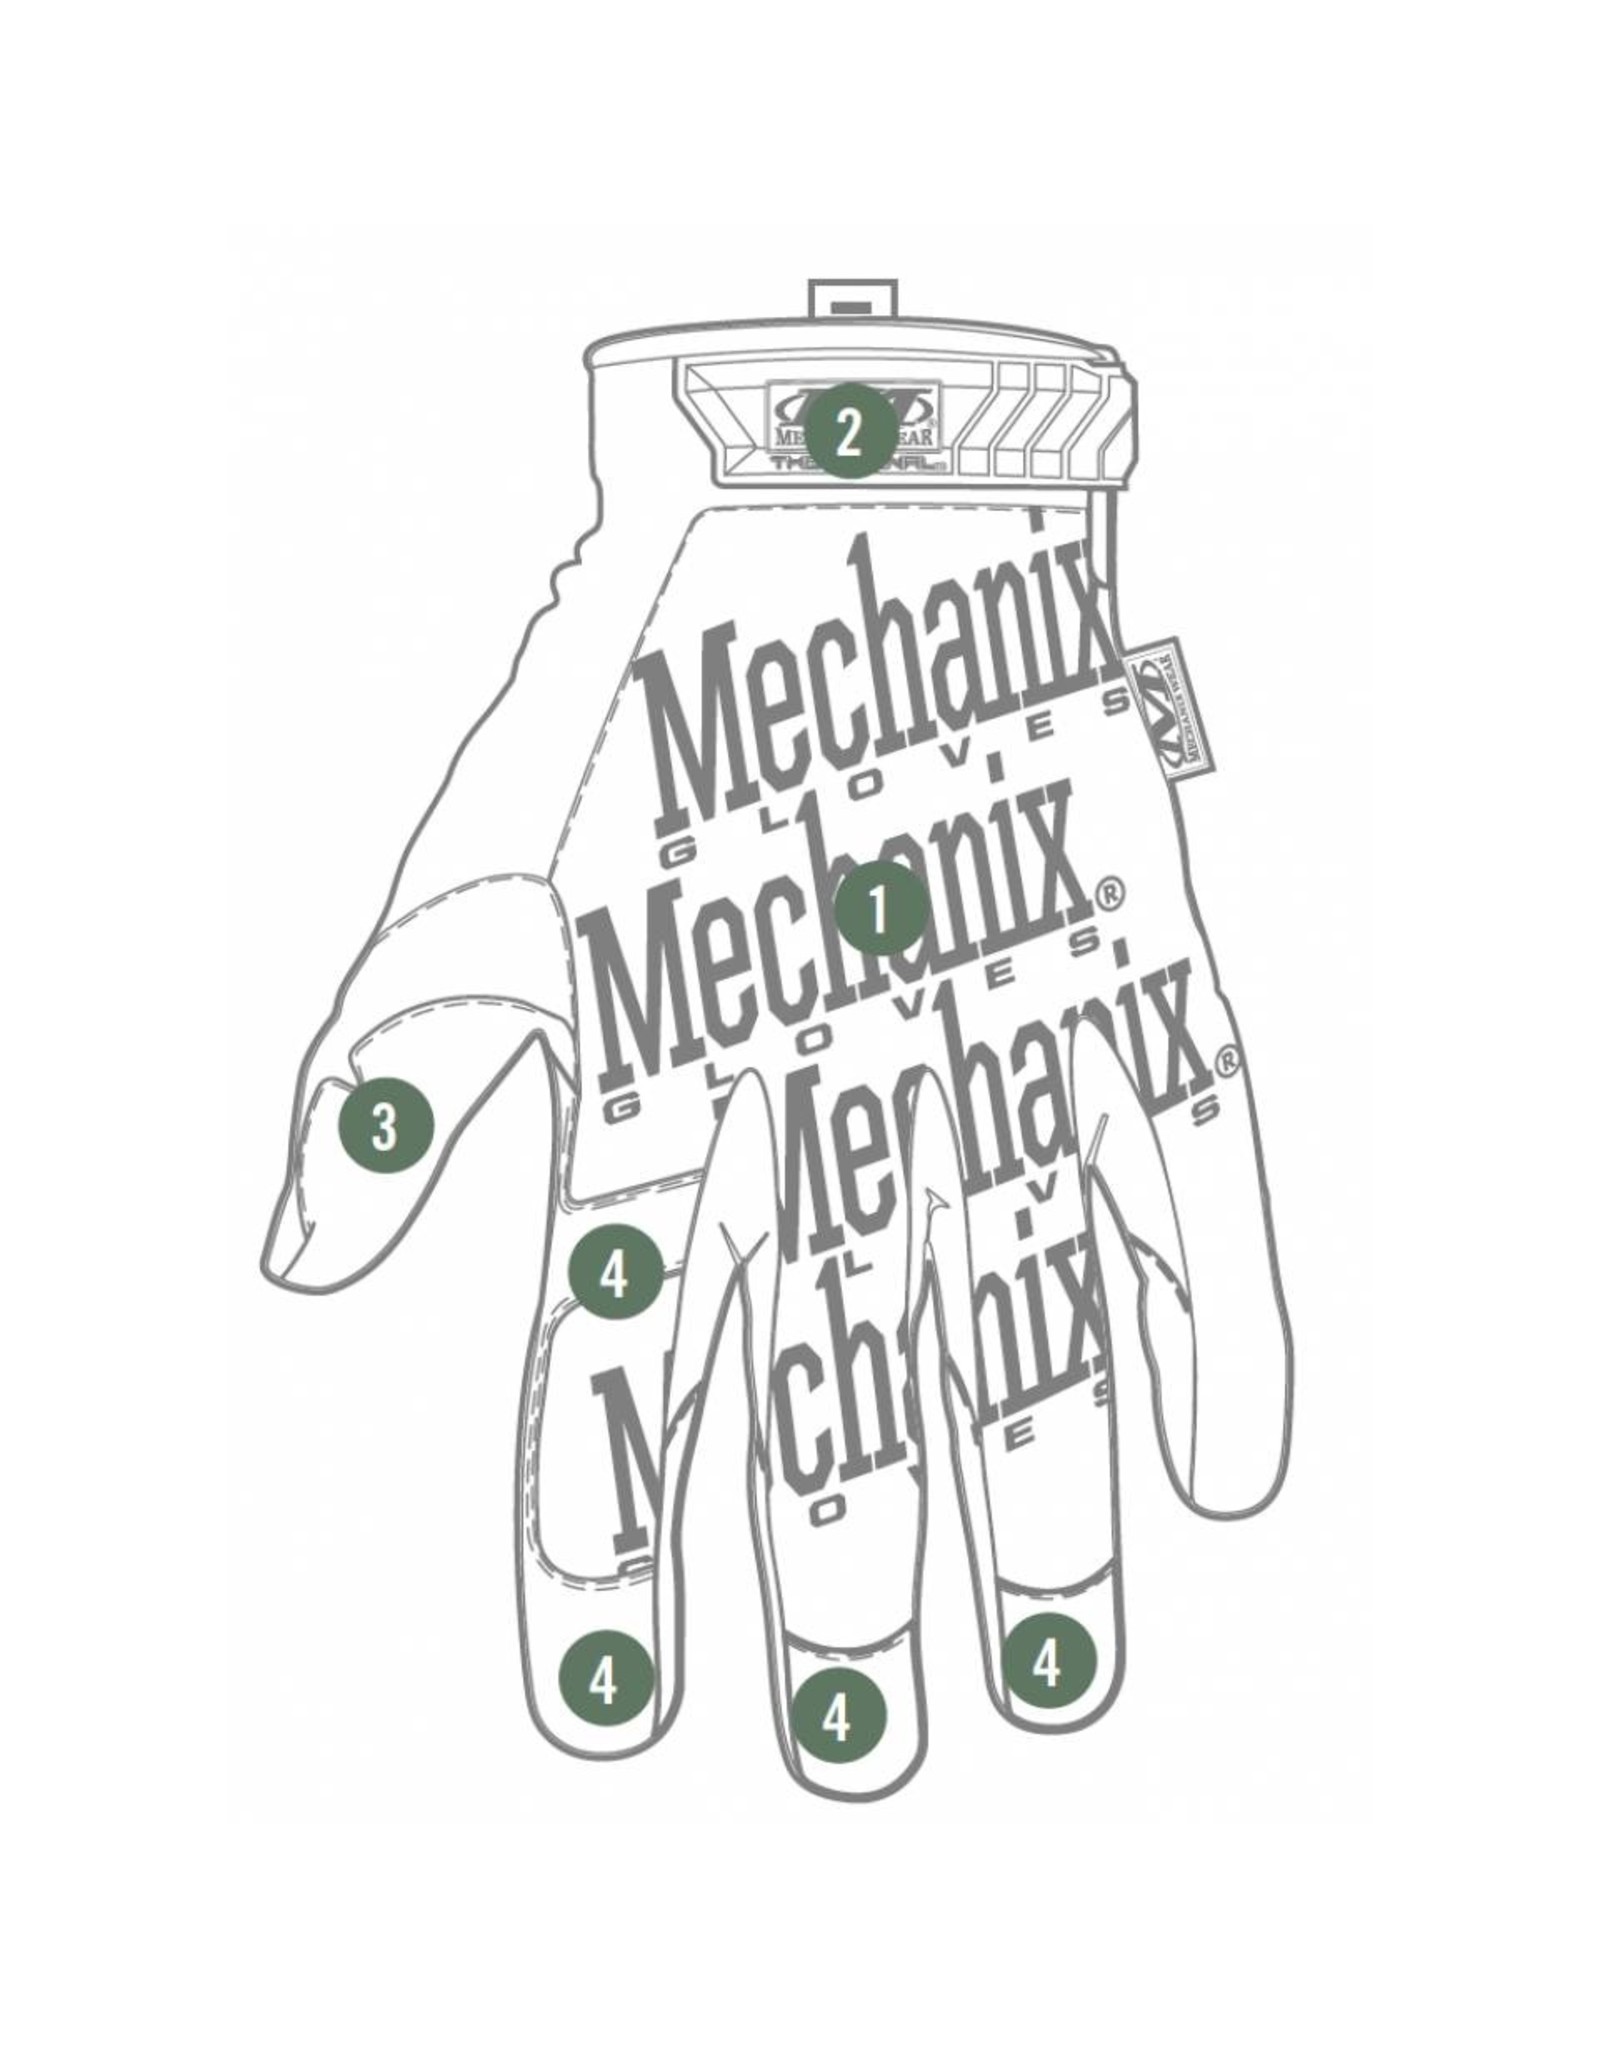 Mechanix Wear The Original Covert - Black